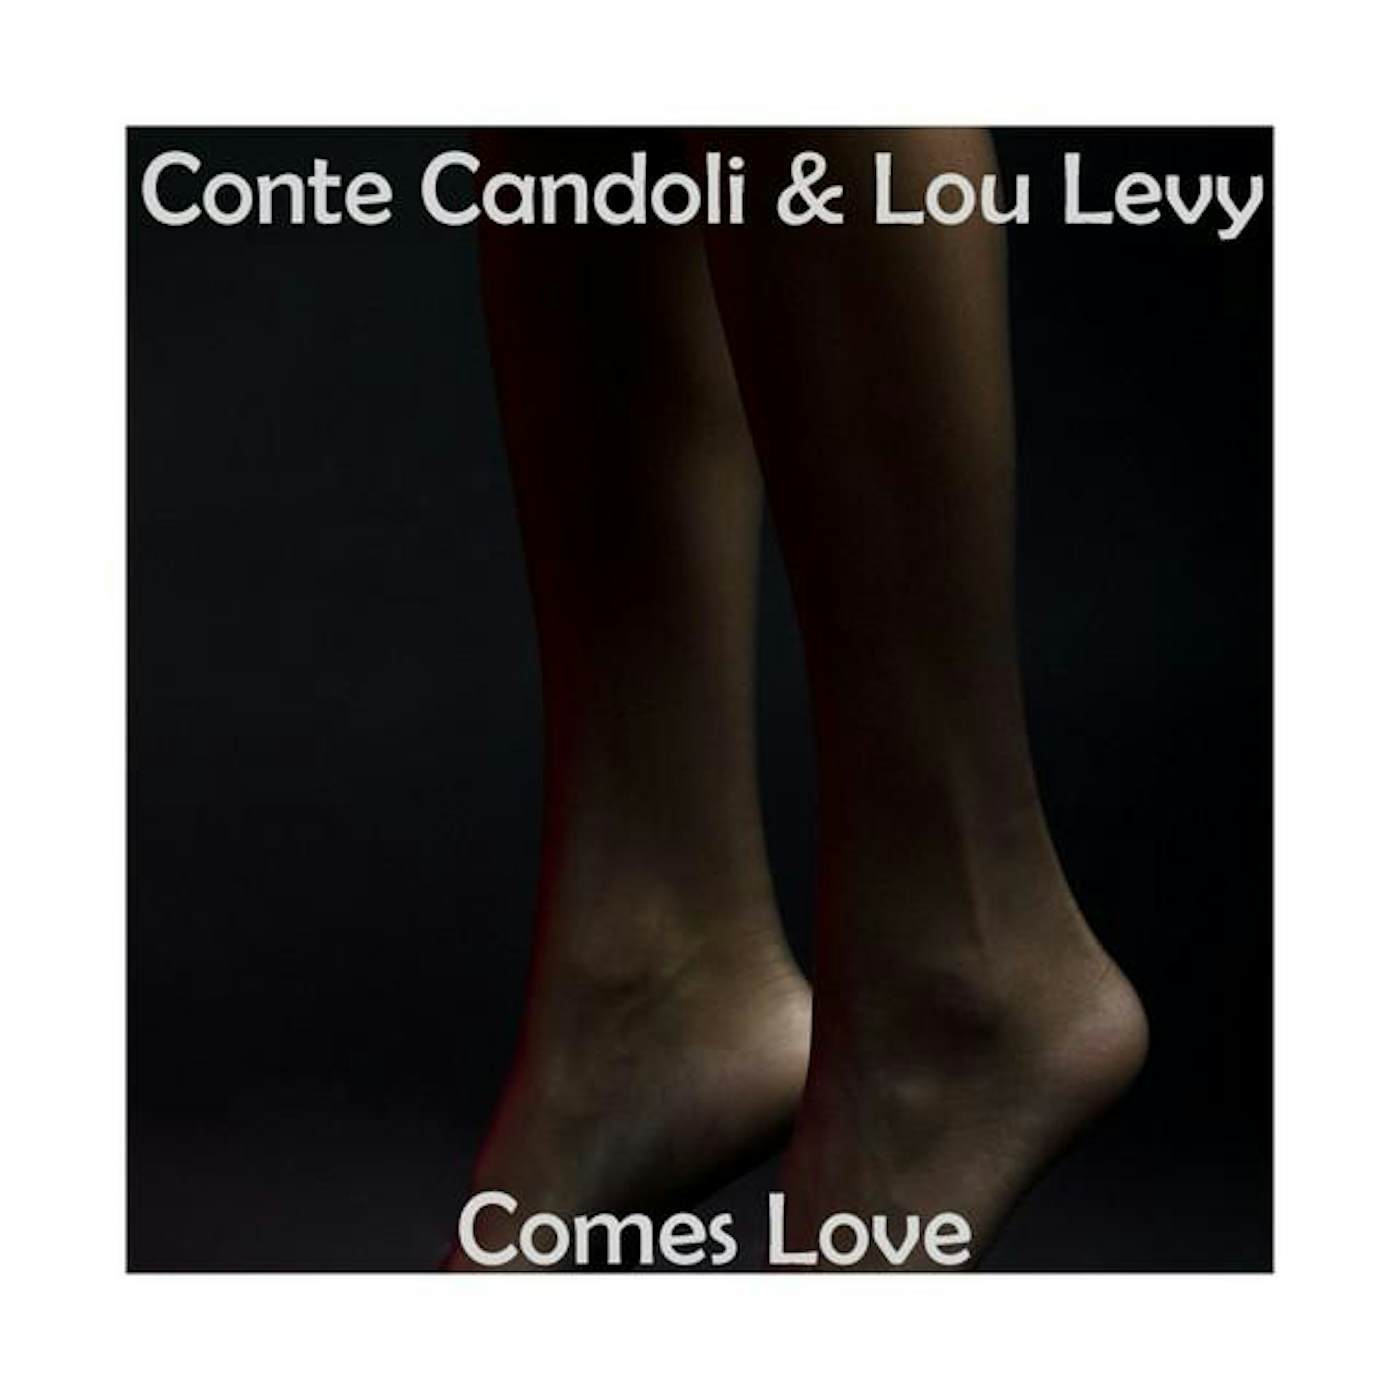 Conte Candoli & Lou Levy